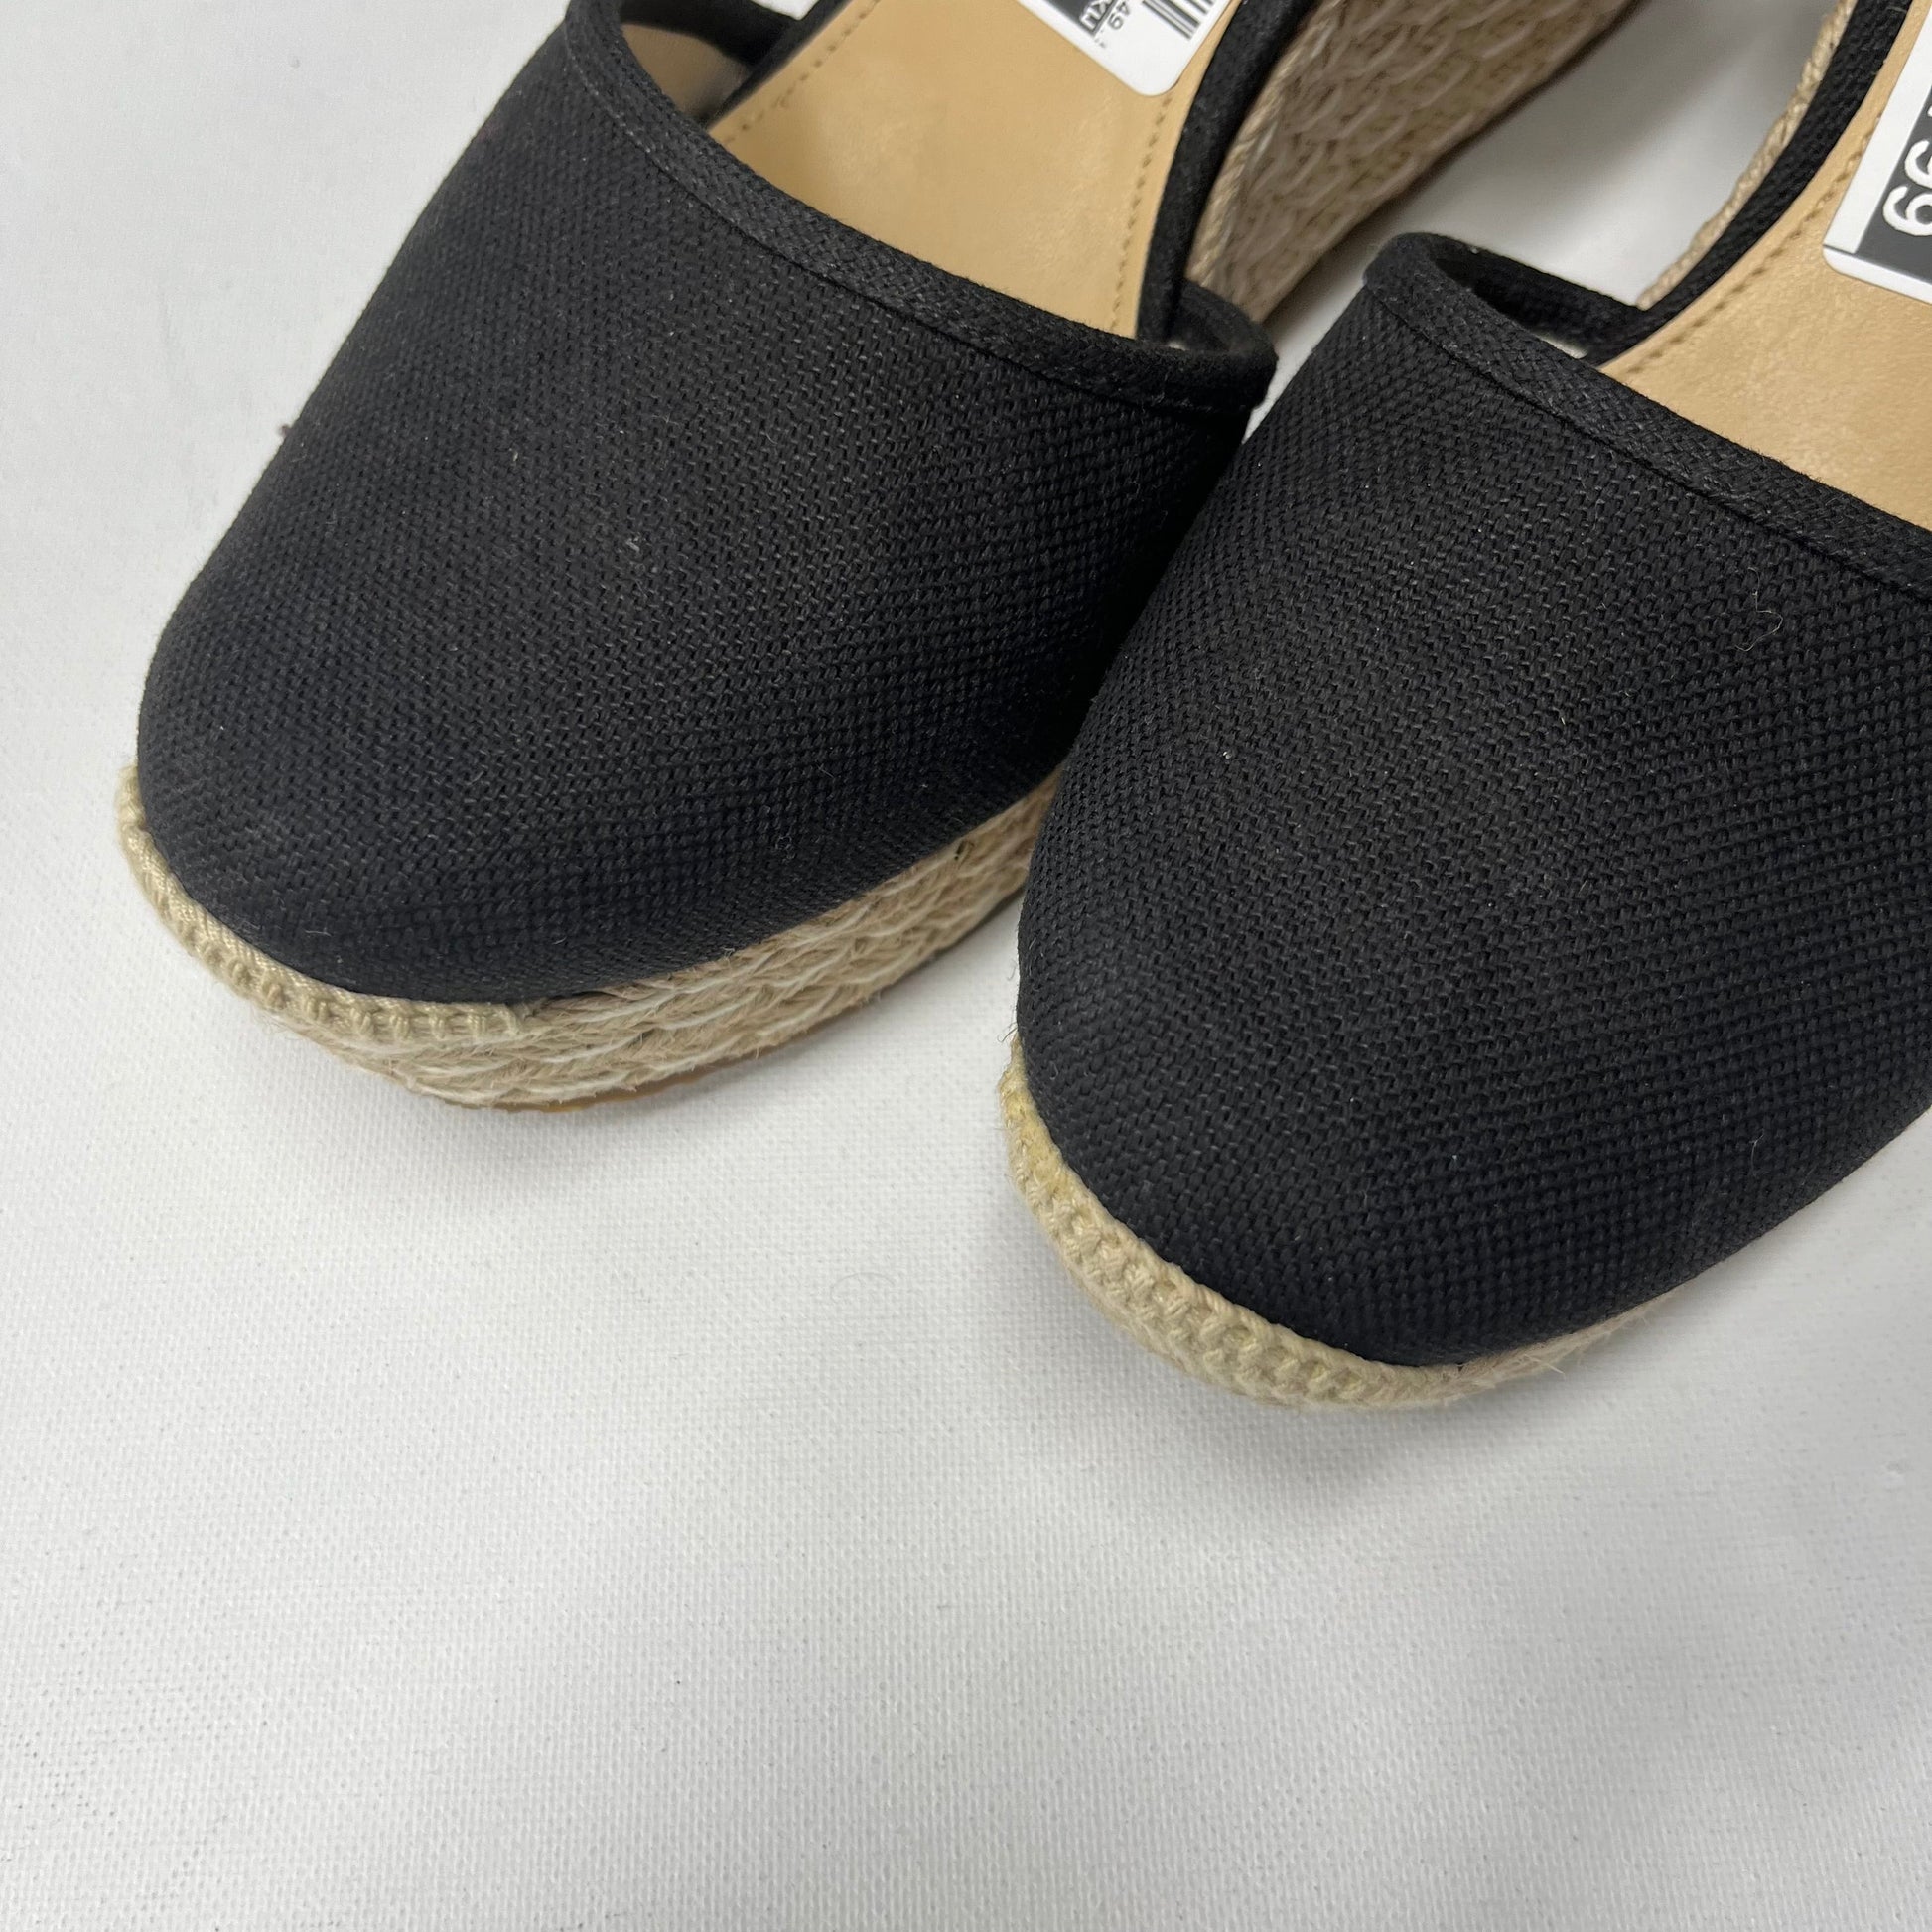 Shoes Heels Espadrille Block By Michael Kors Size: 9.5